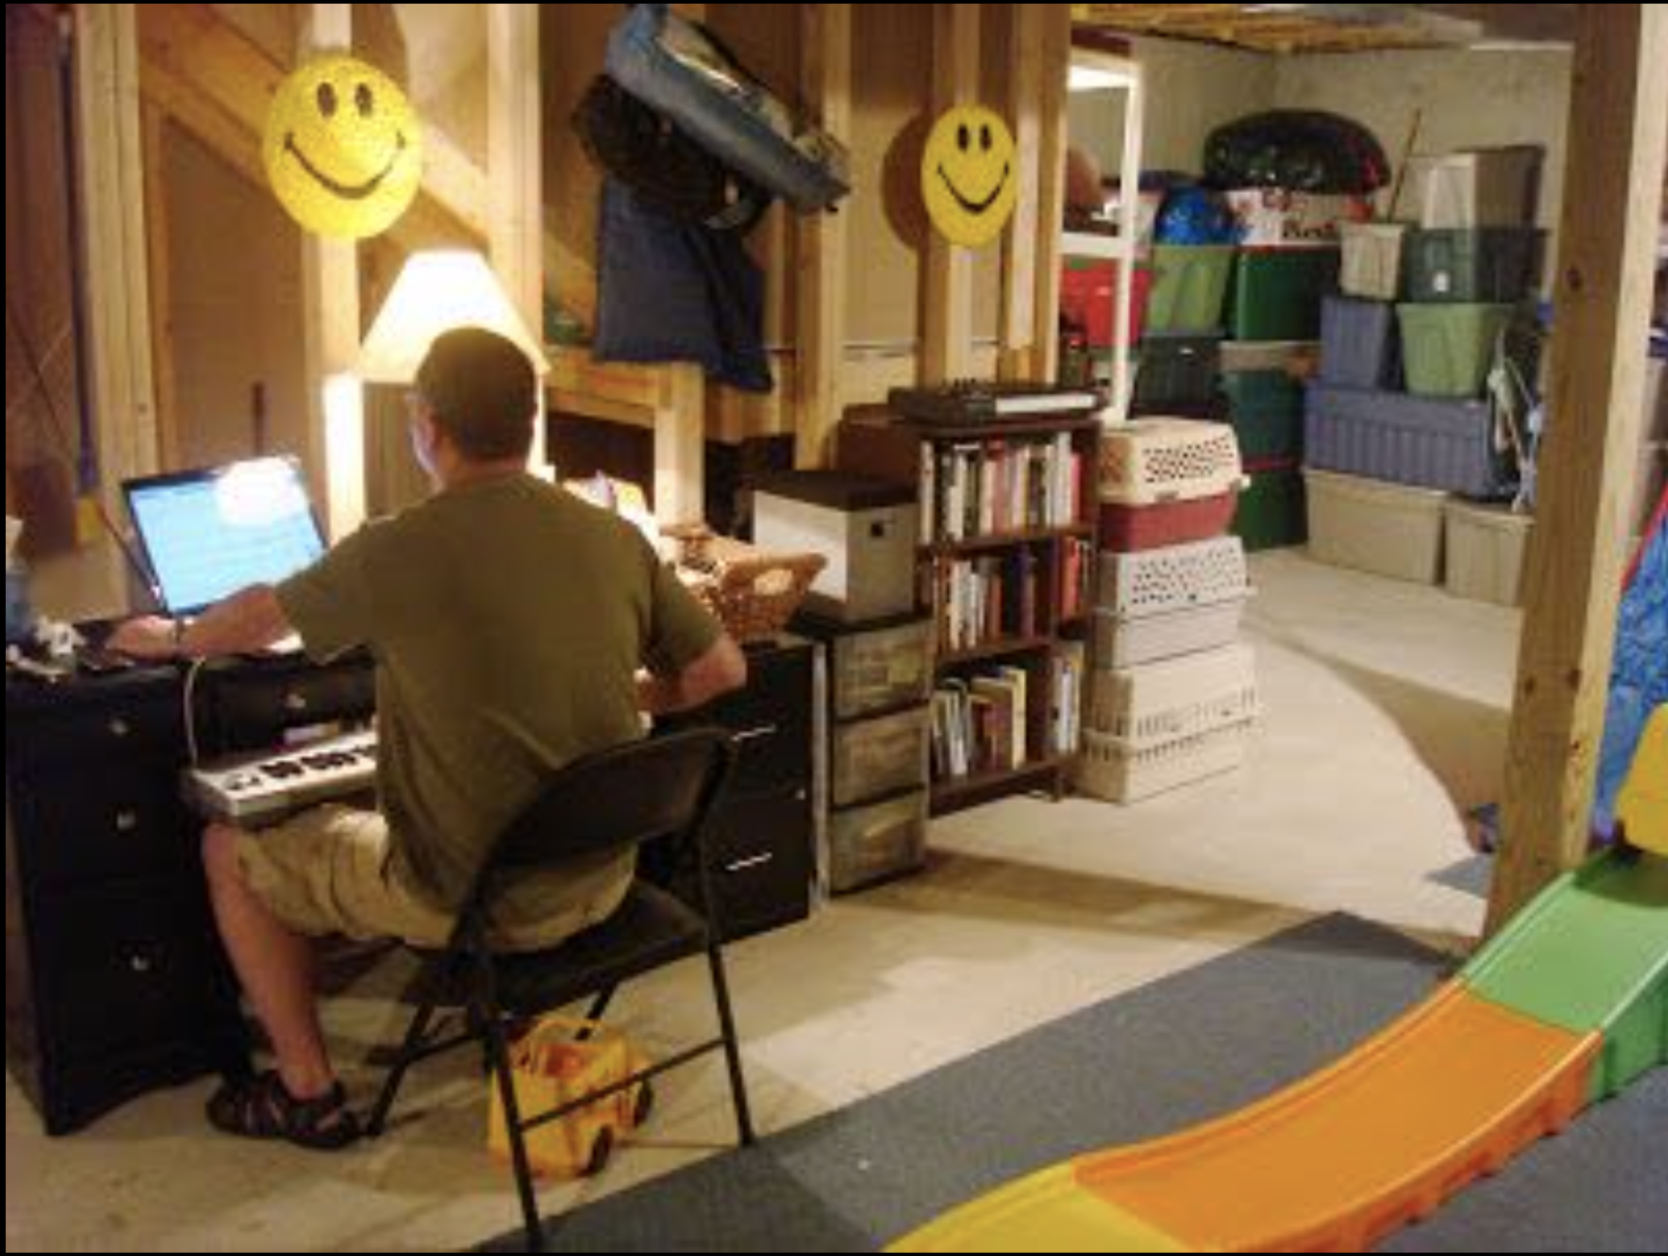 basement man computer smiley faces desk office